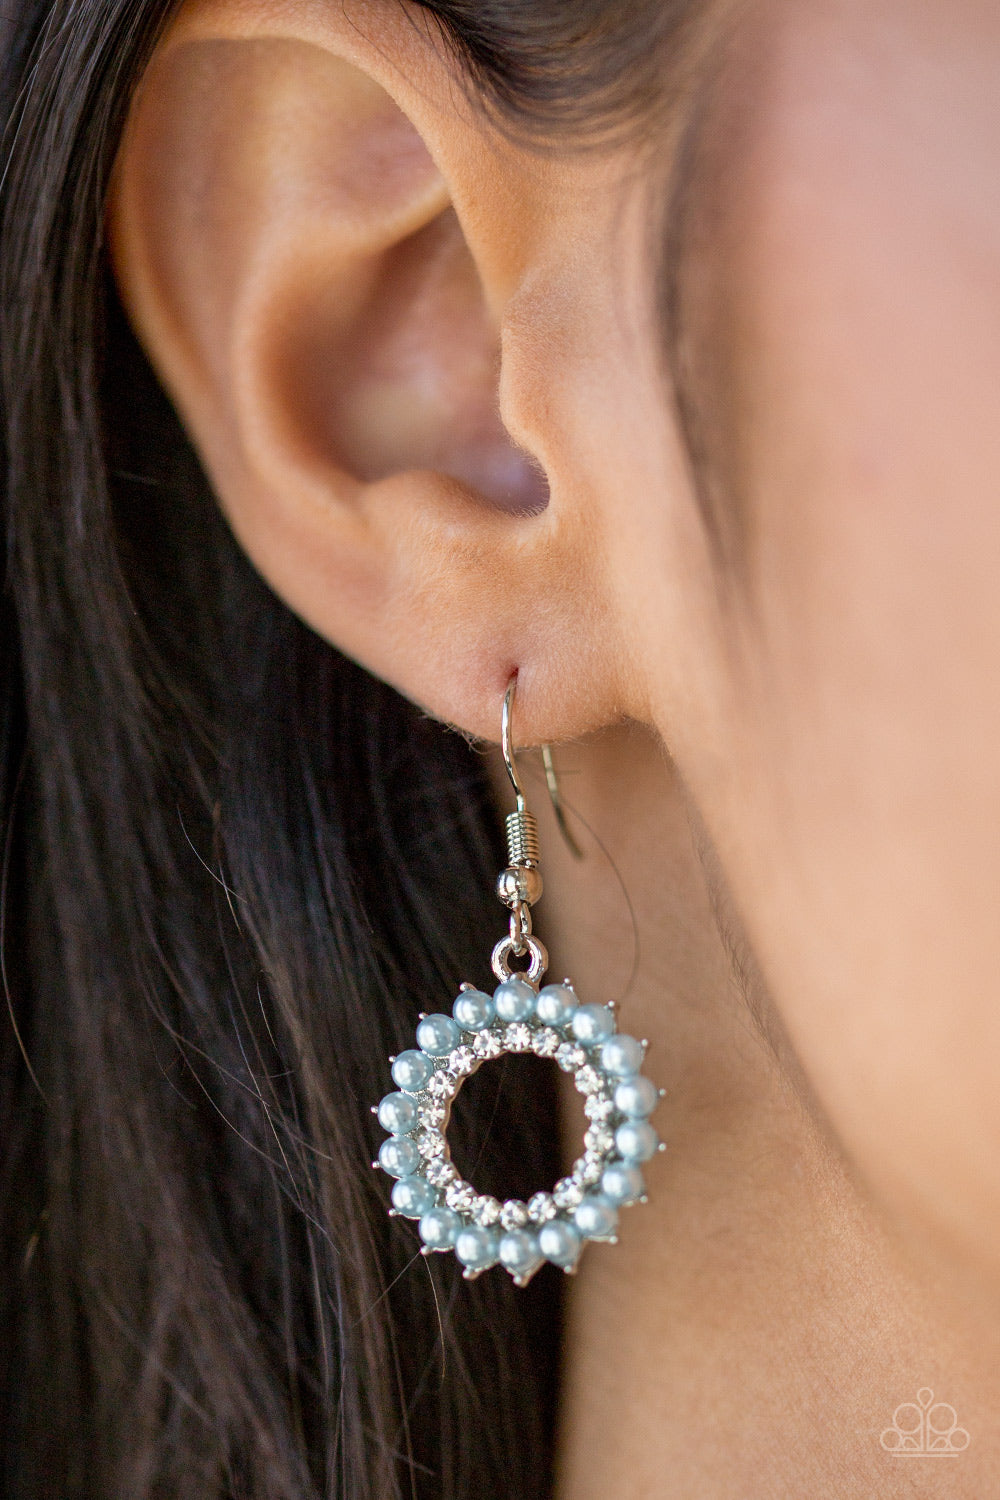 Paparazzi A Proper Lady - Blue Pearls - Silver Earrings - $5 Jewelry With Ashley Swint